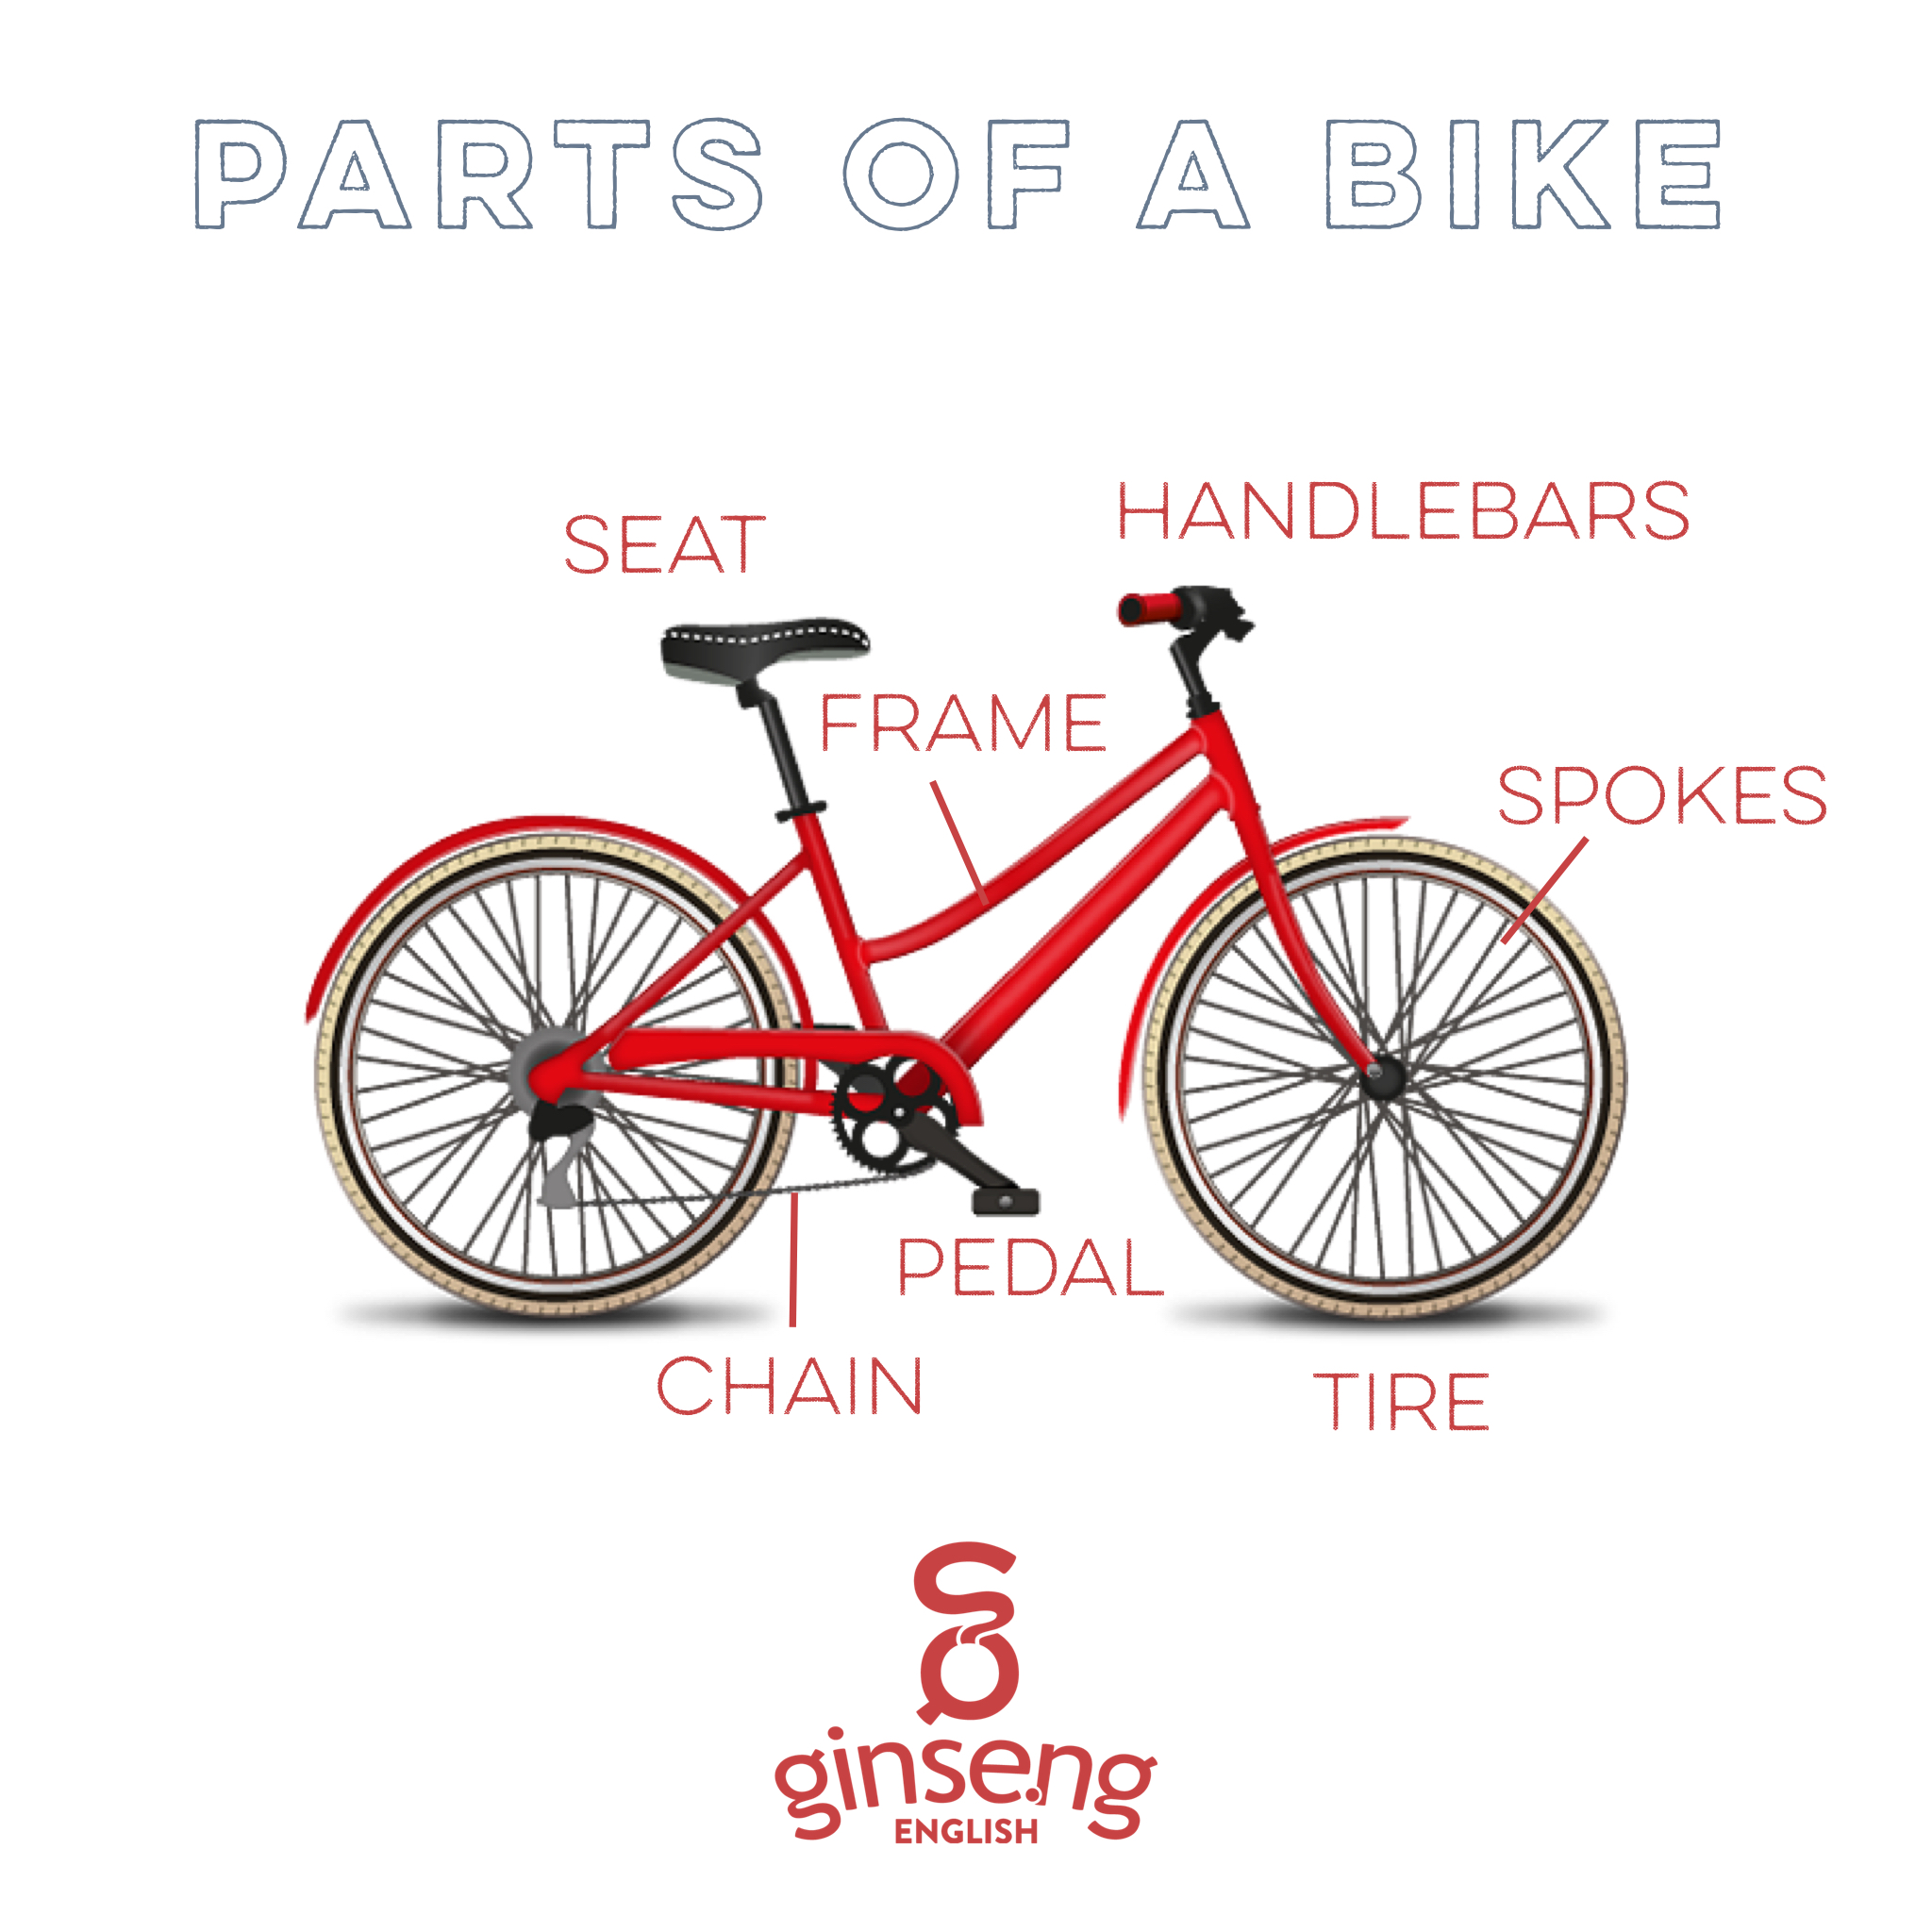 Велосипед по английскому. Bicycle Parts in English. Part of Bicycle. Bike по-английски. Riding a bike перевод на русский